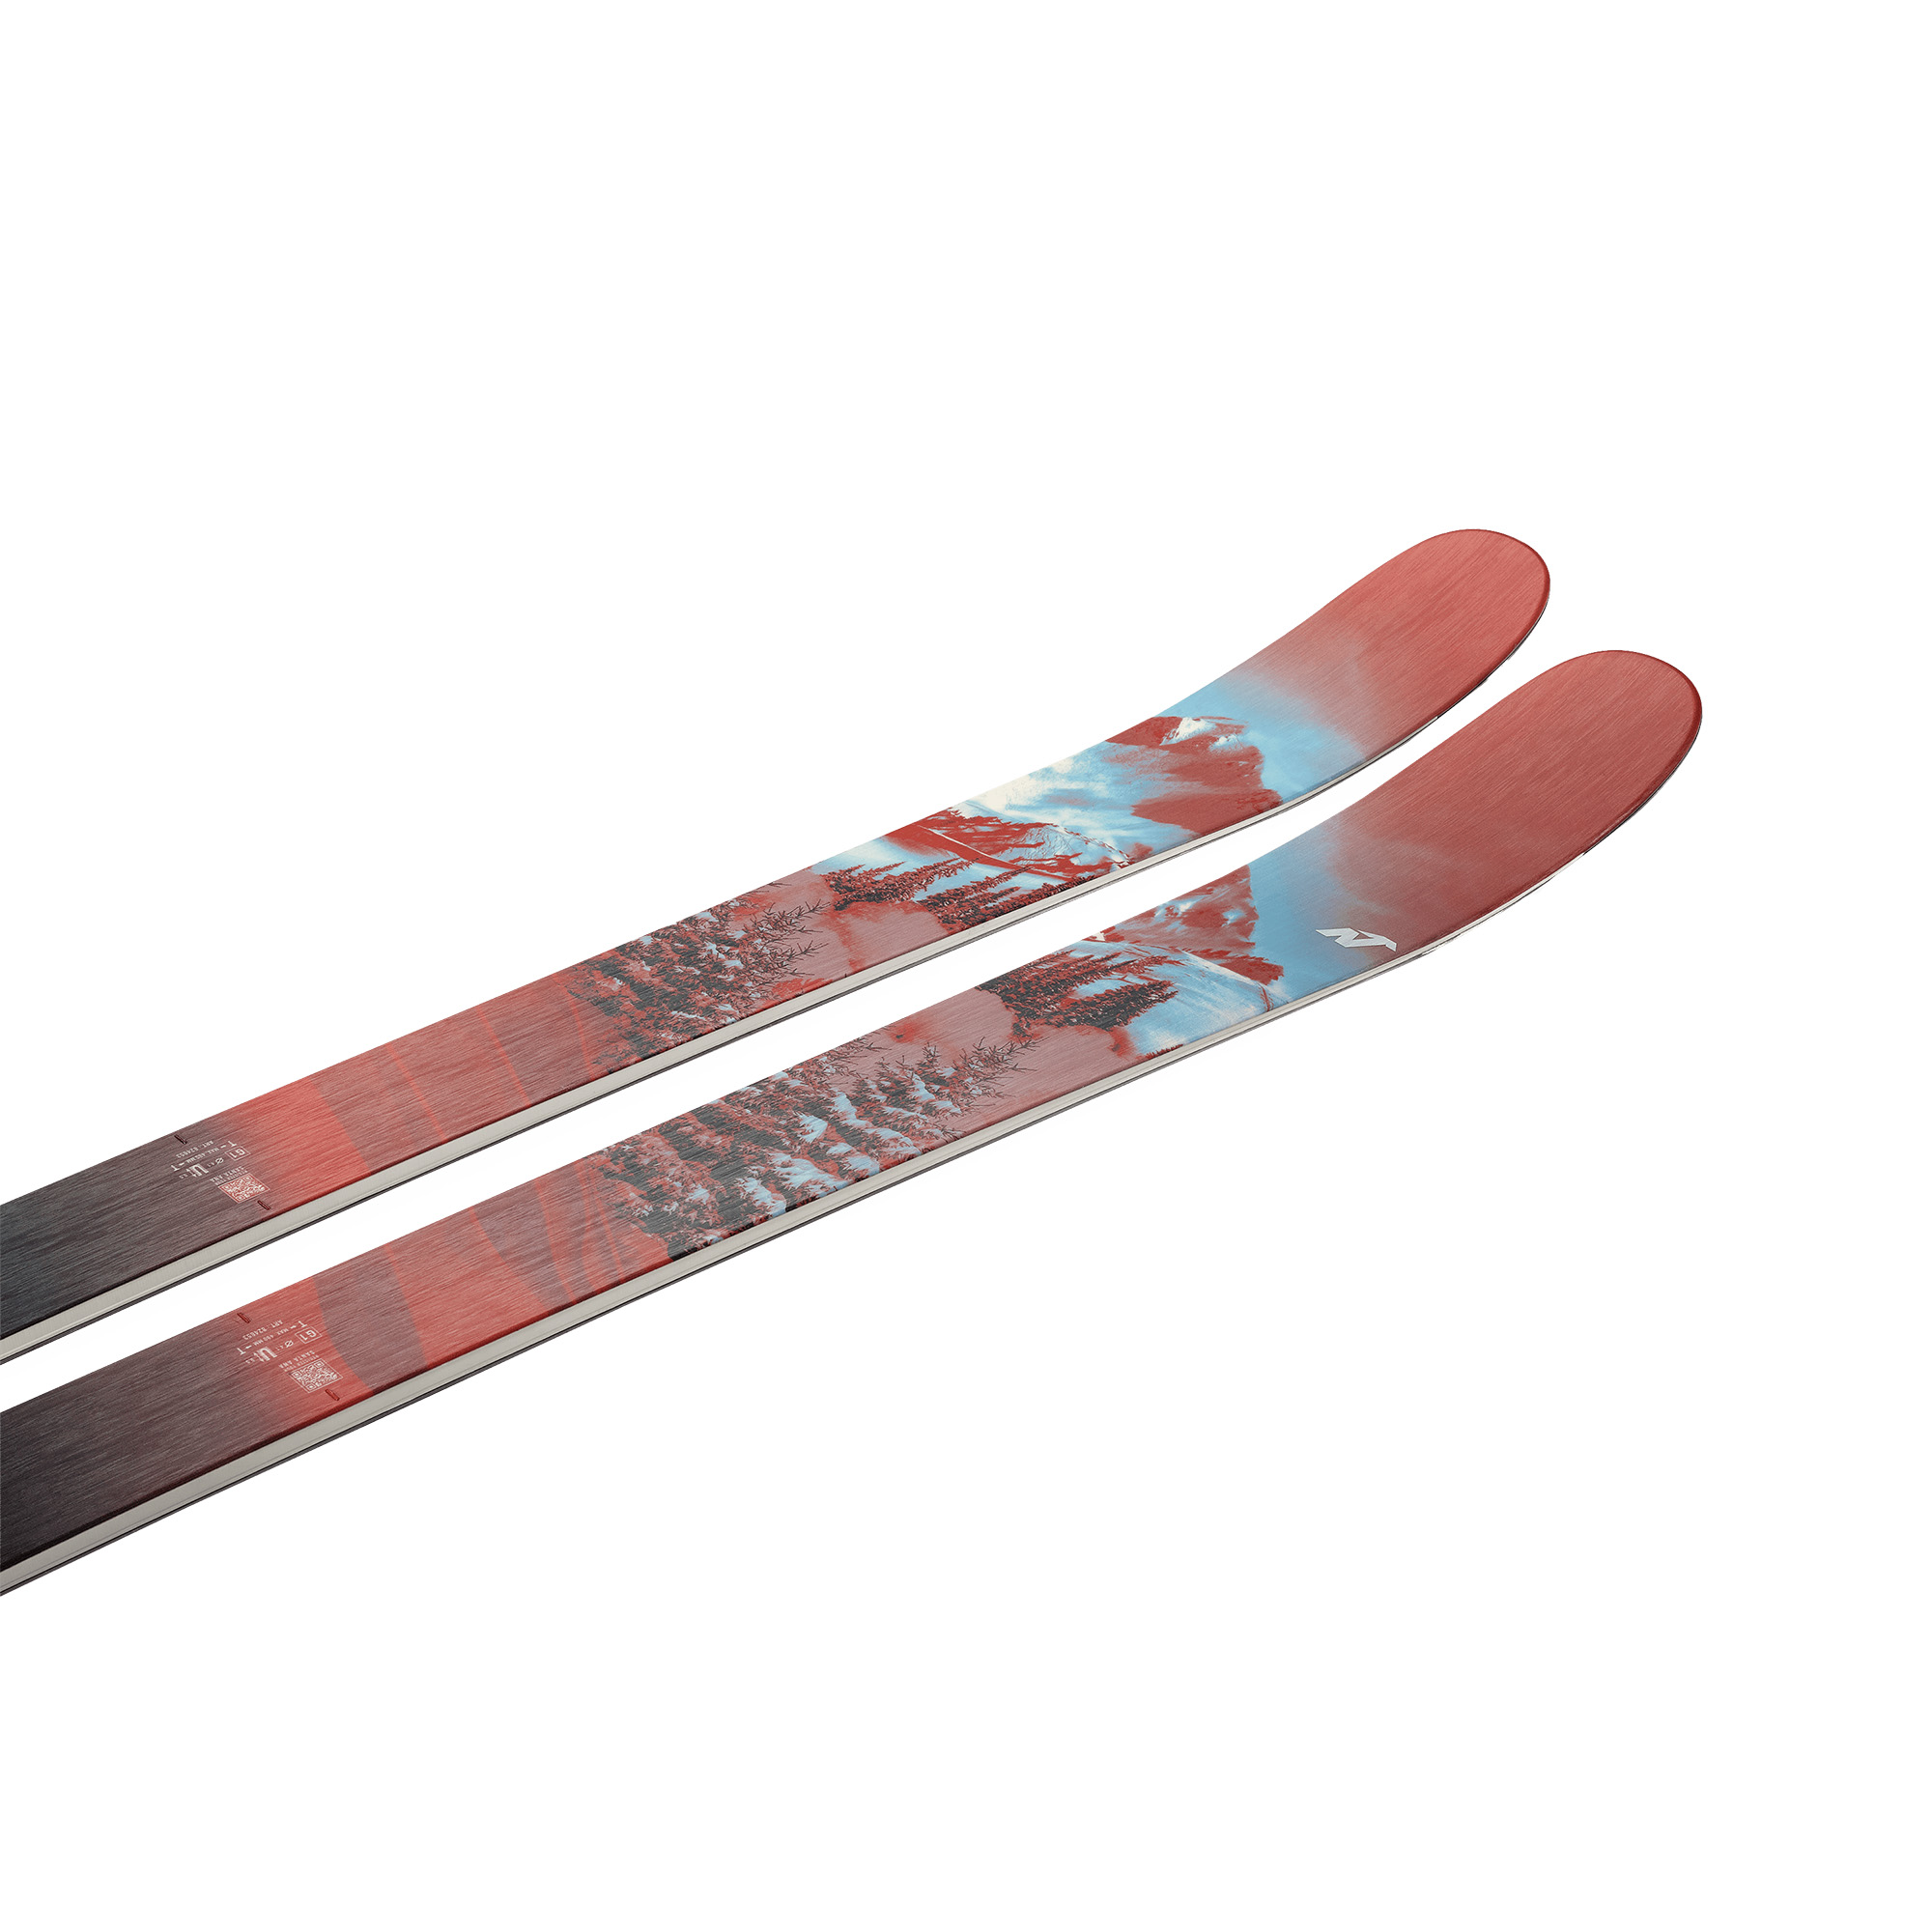 Nordica Santa Ana 98 Women's Skis